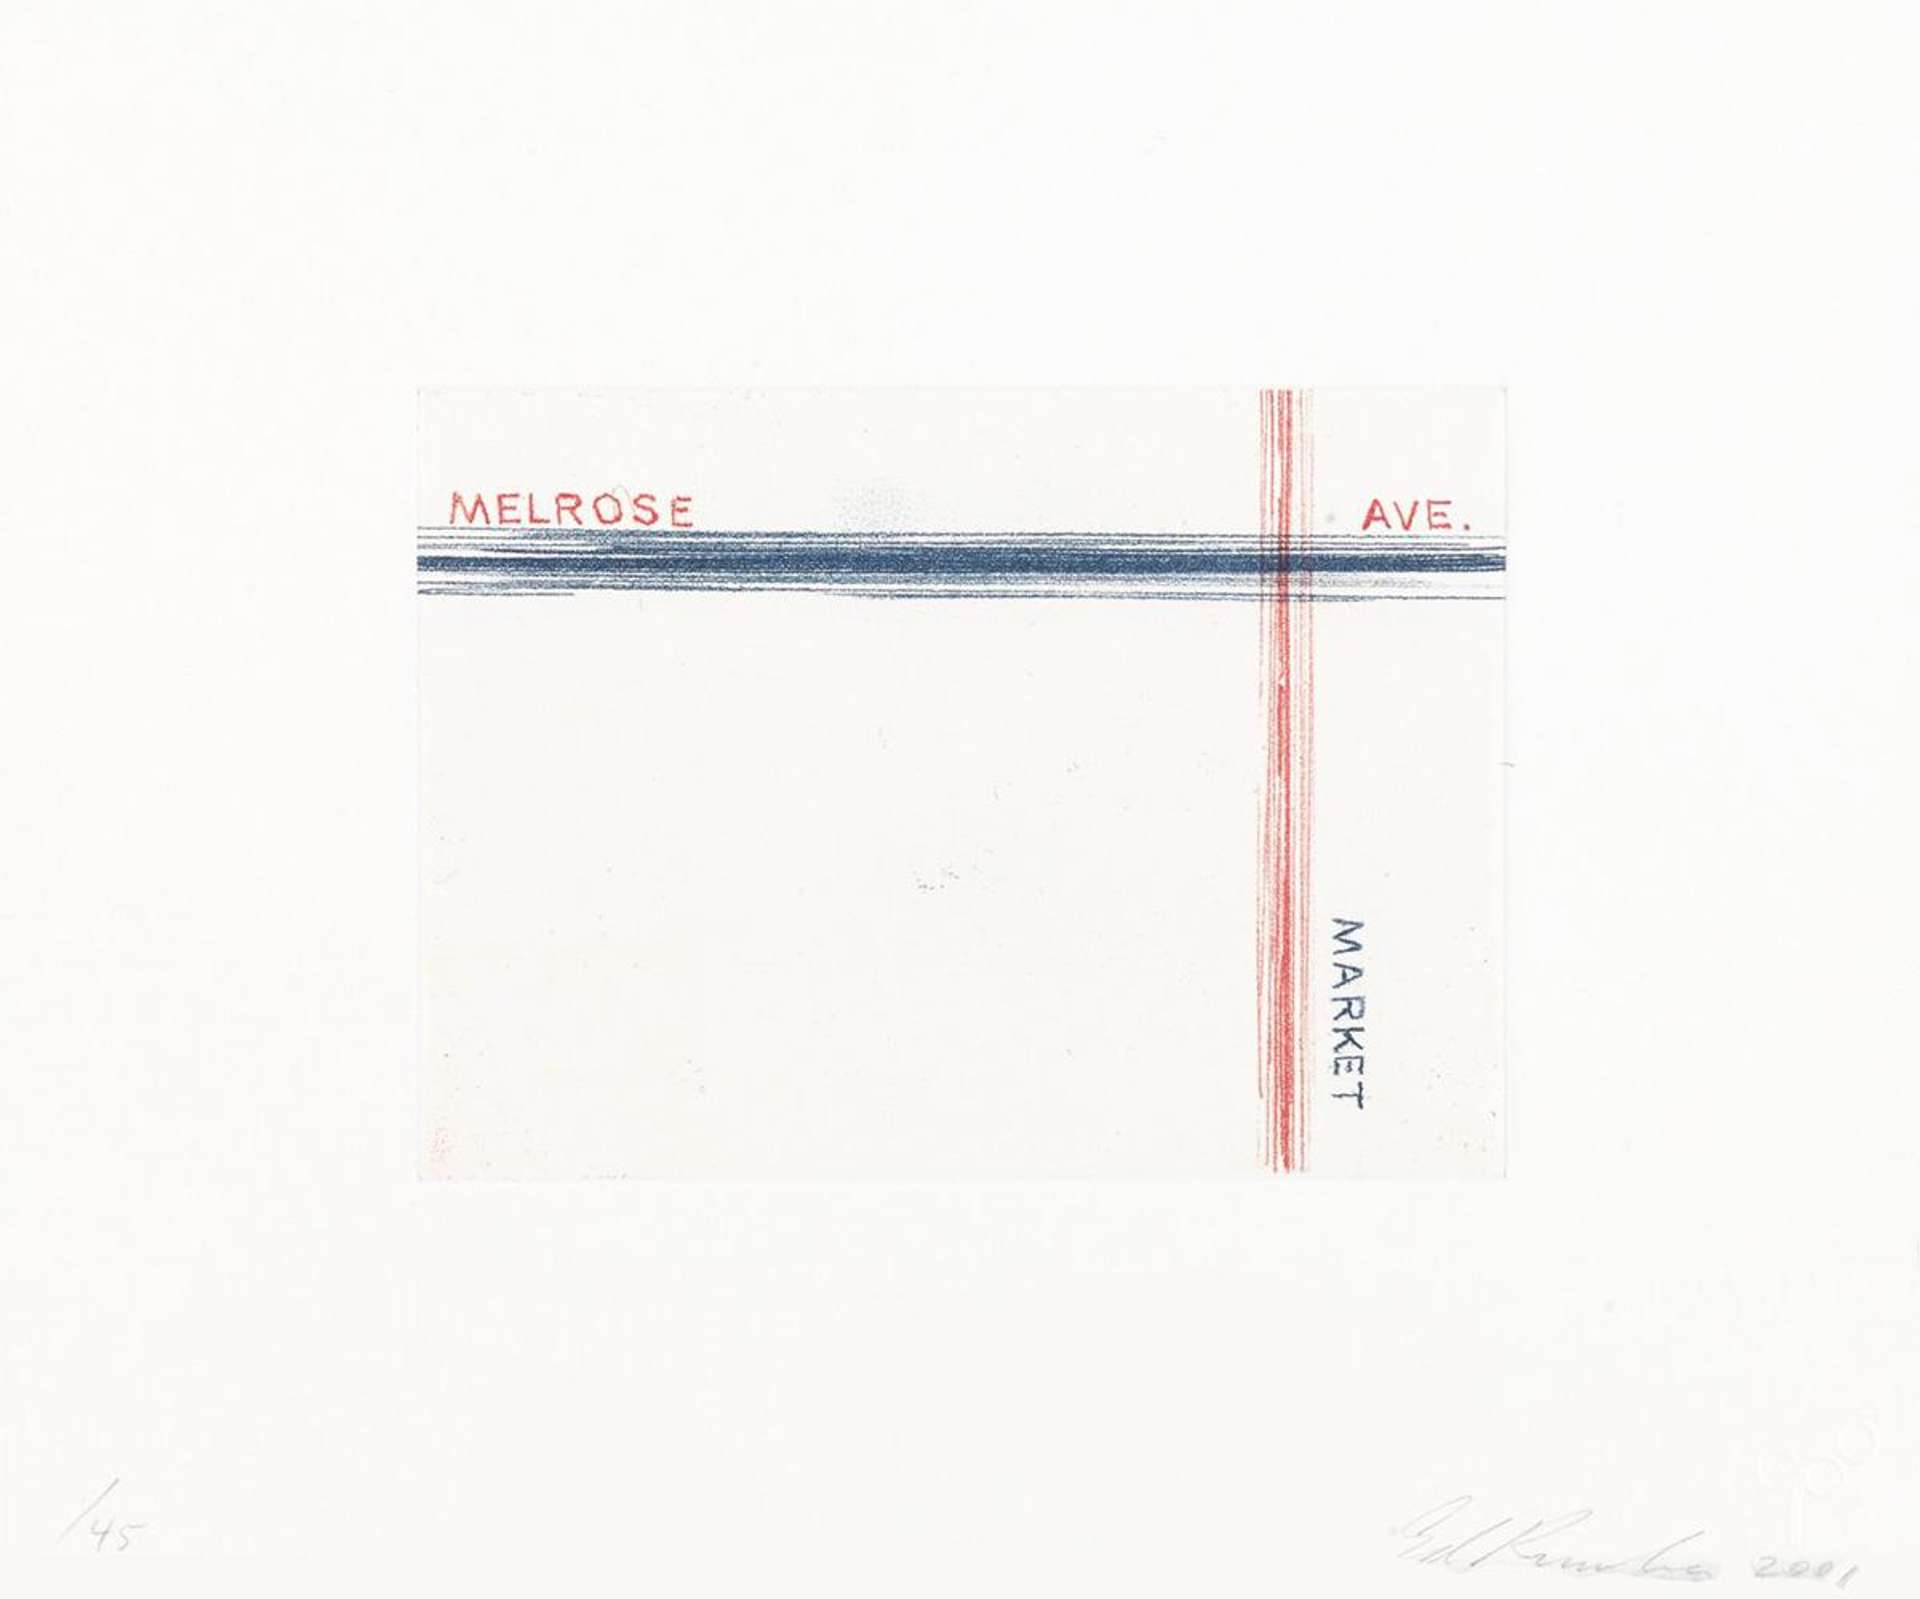 Melrose, Market - Signed Print by Ed Ruscha 2001 - MyArtBroker